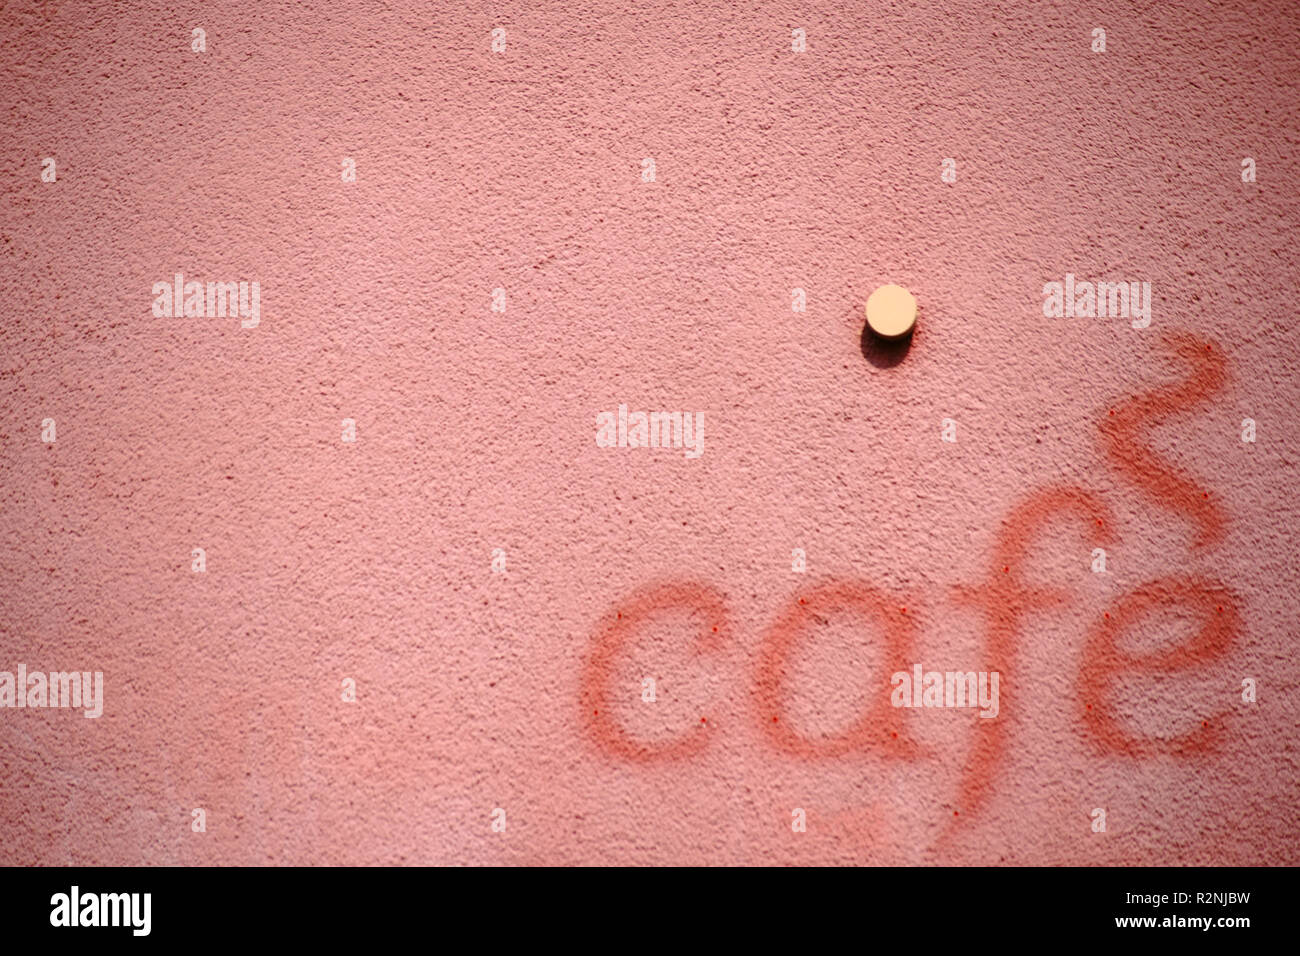 Der Schriftzug 'Café' an der Fassade eines Gebäudes in Farbe Kontrast zu dem heller Fassade, Stockfoto